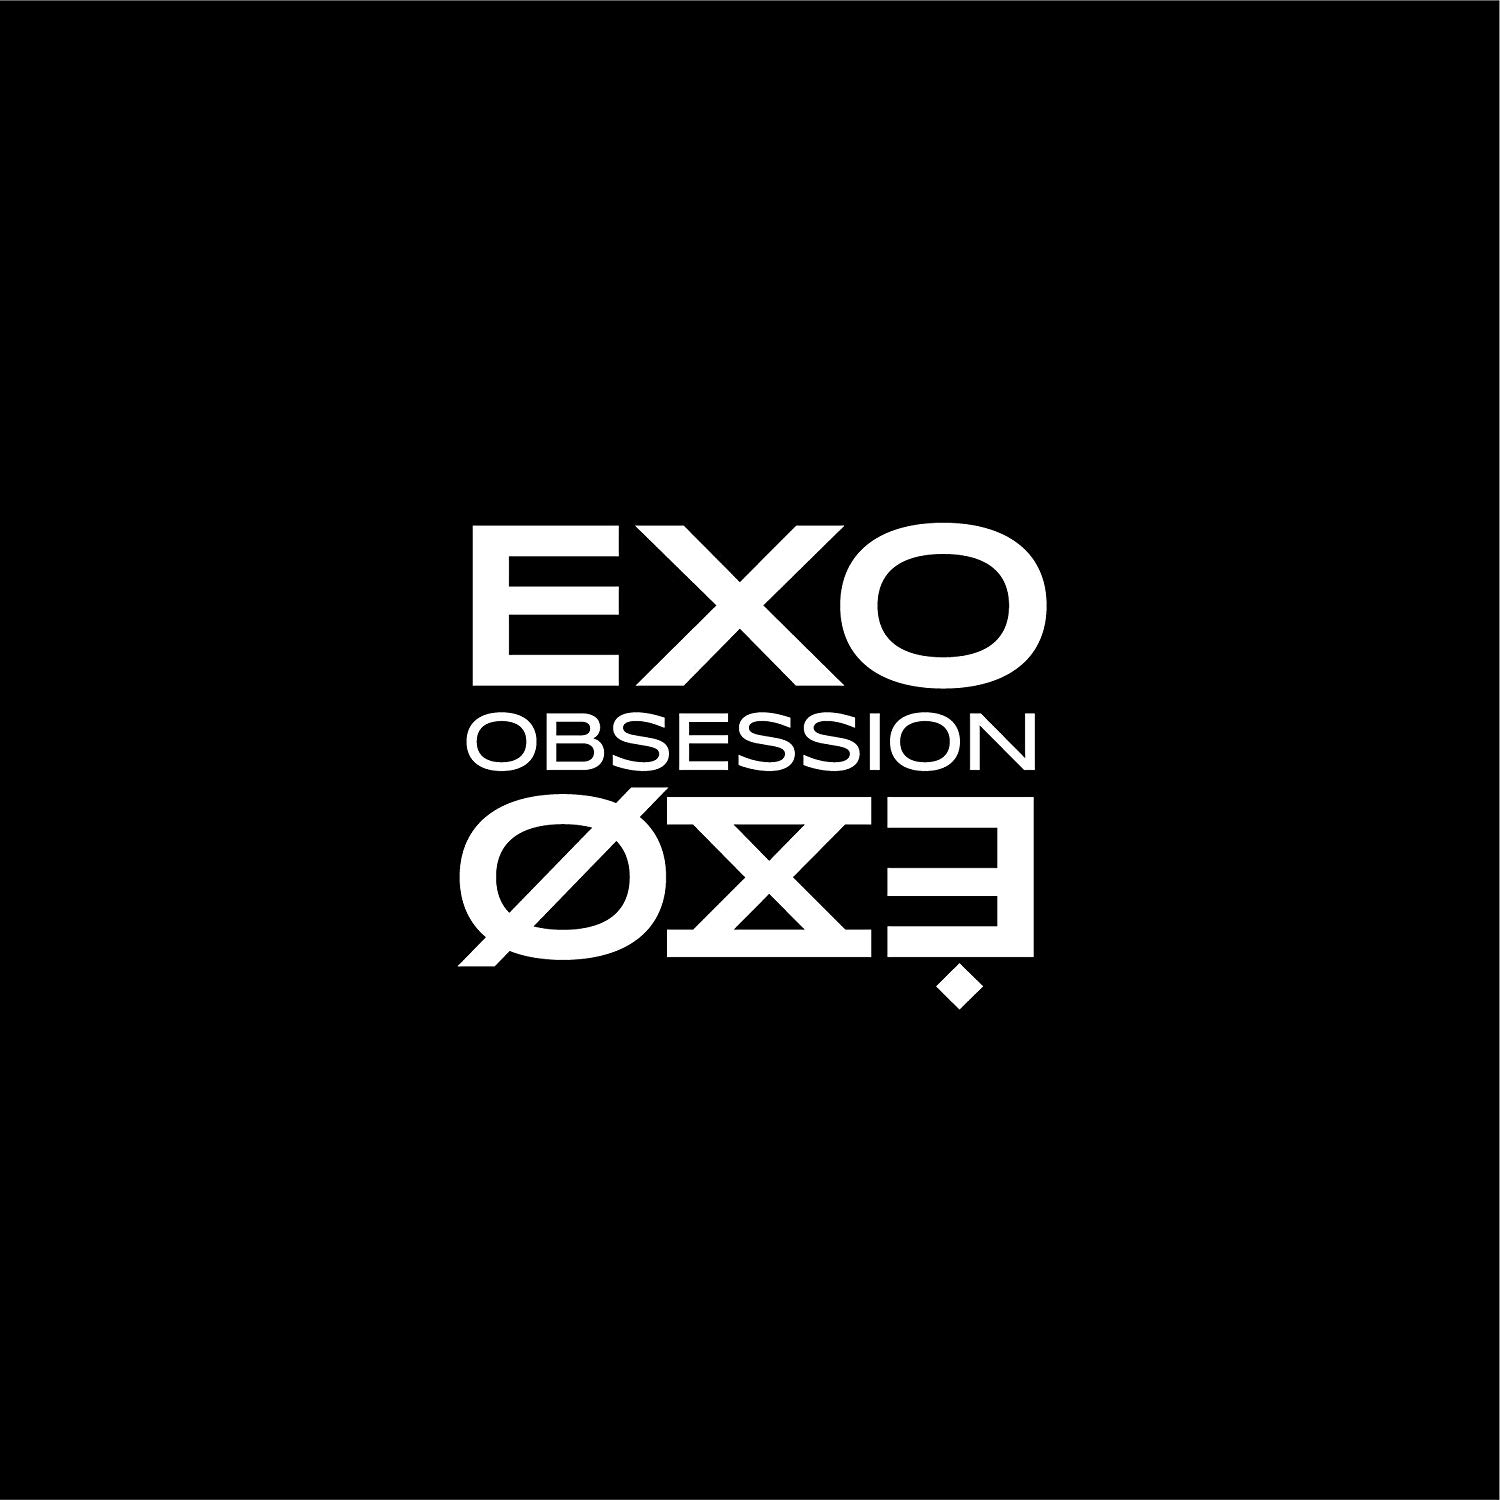 Exo obsession version | Exo